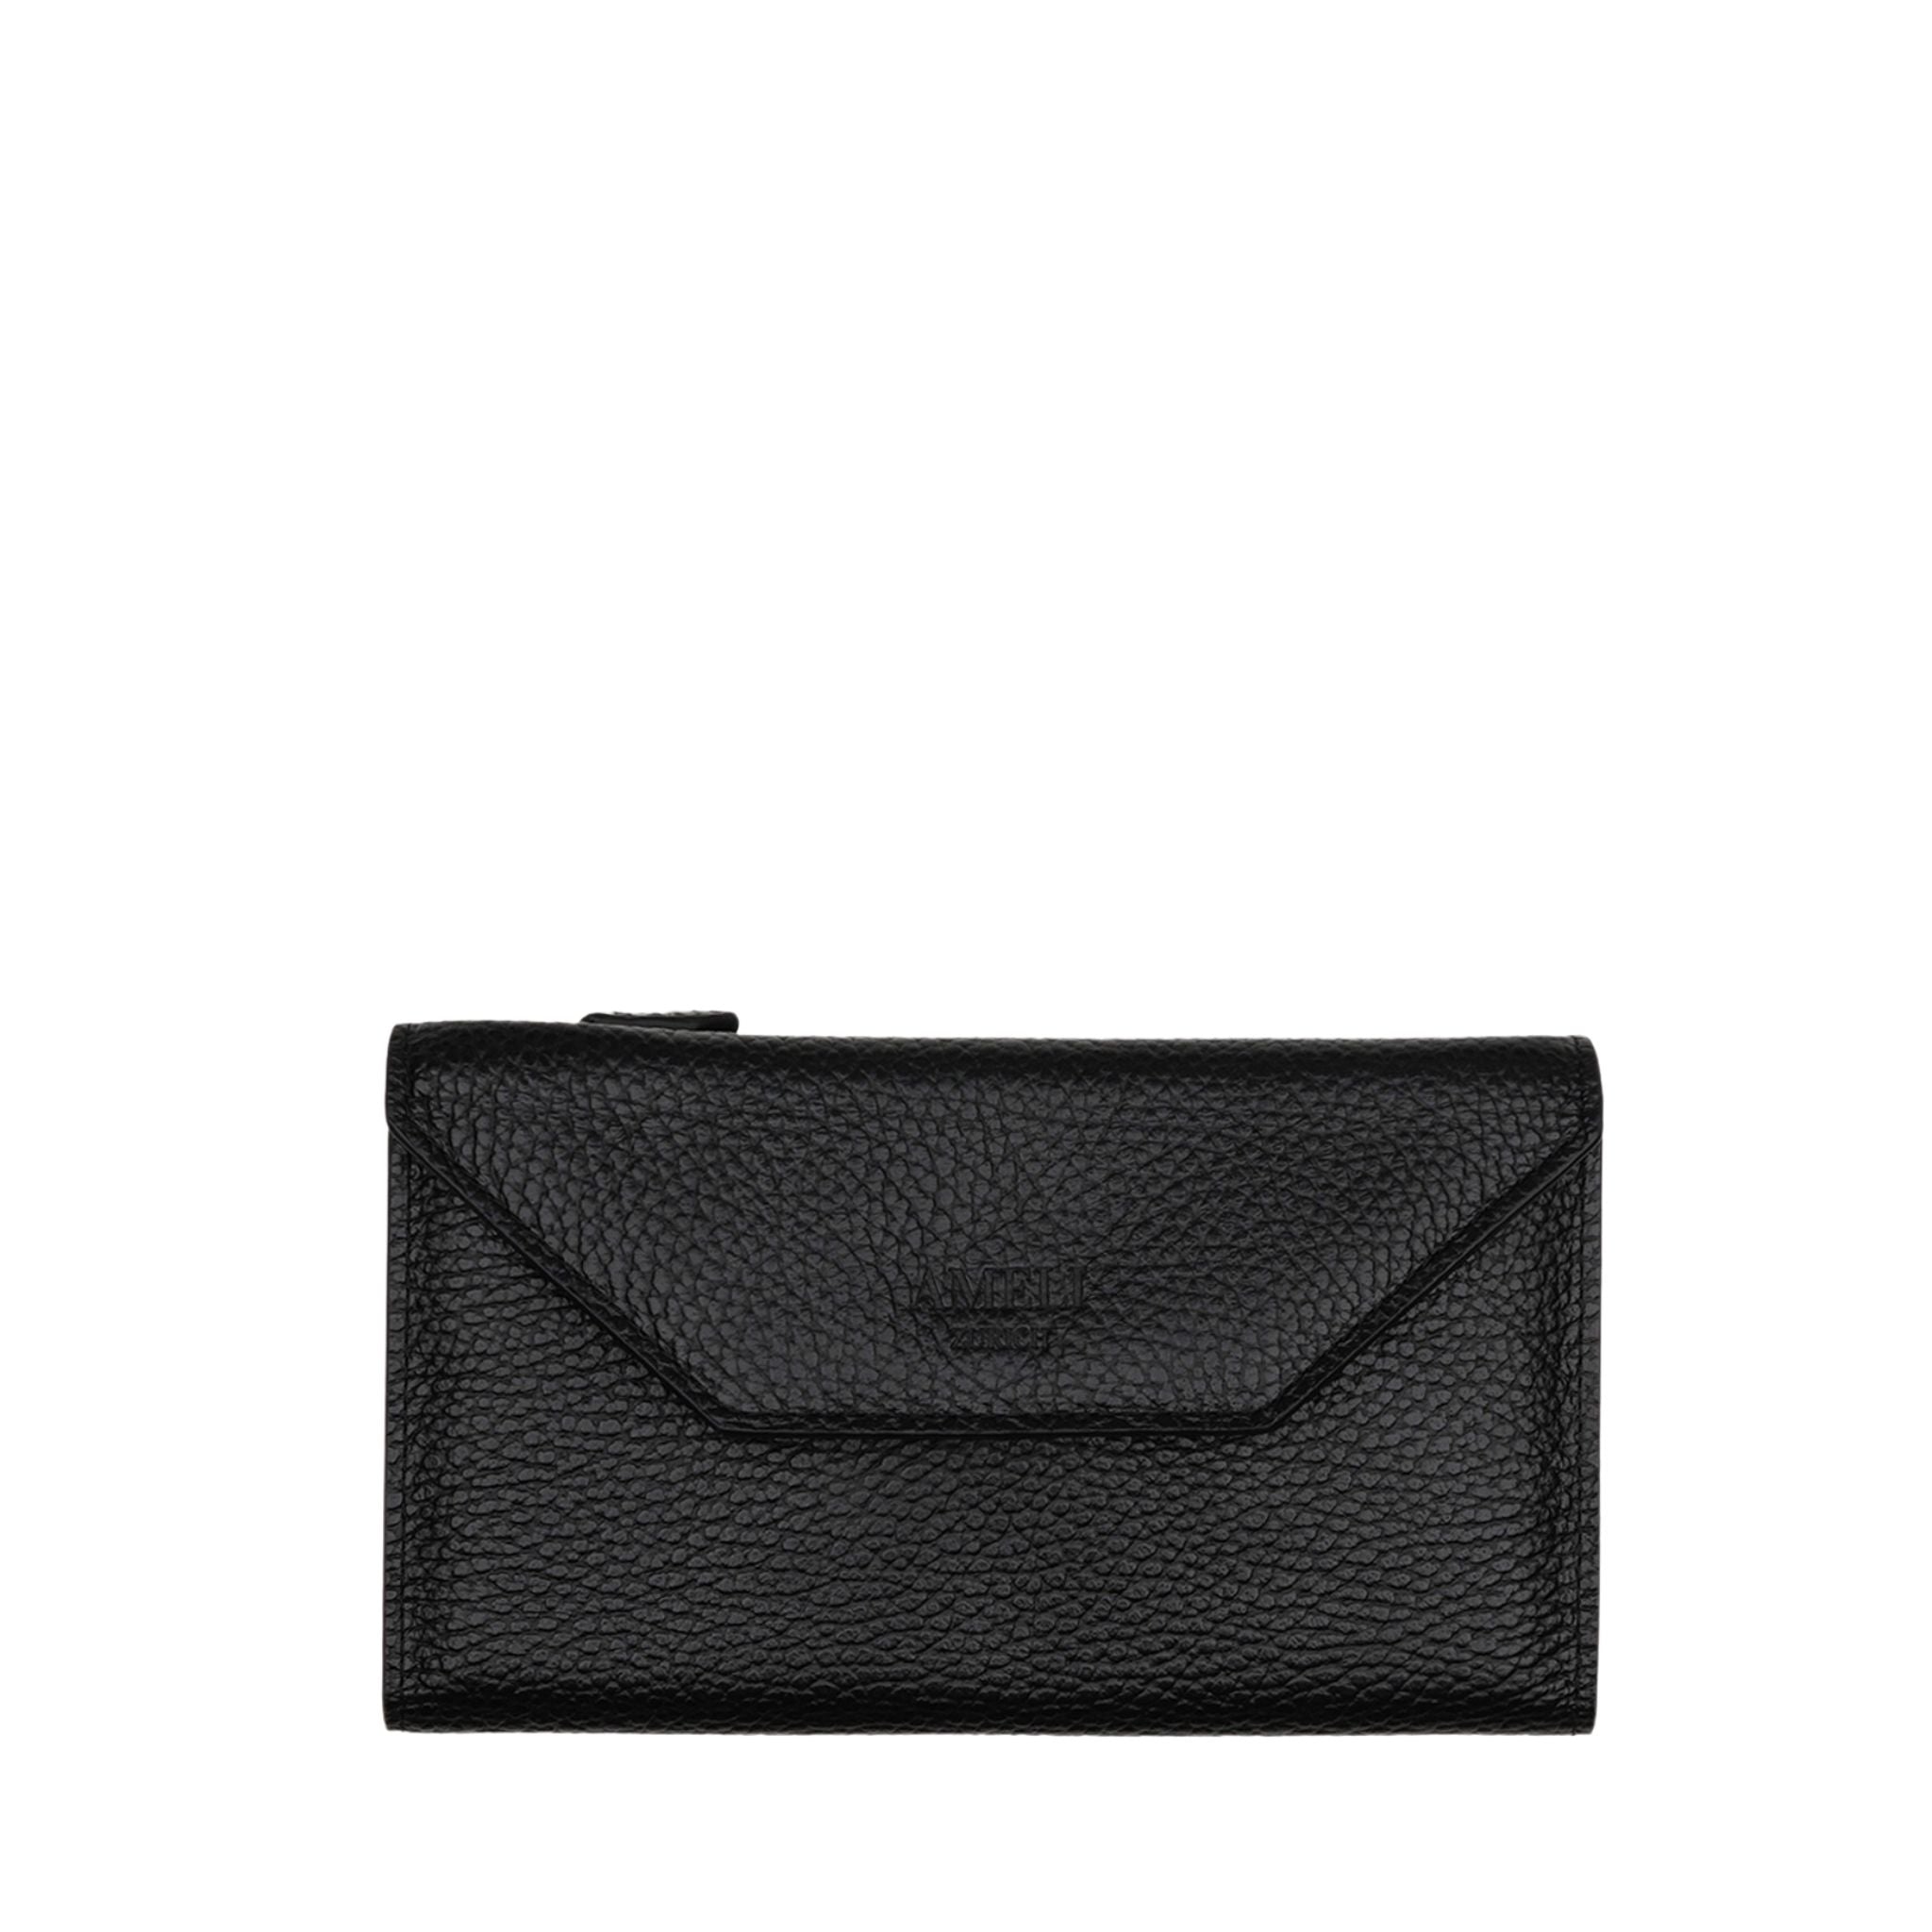 AMELI Zurich | Wallet | Black | Soft Grain Leather | Front